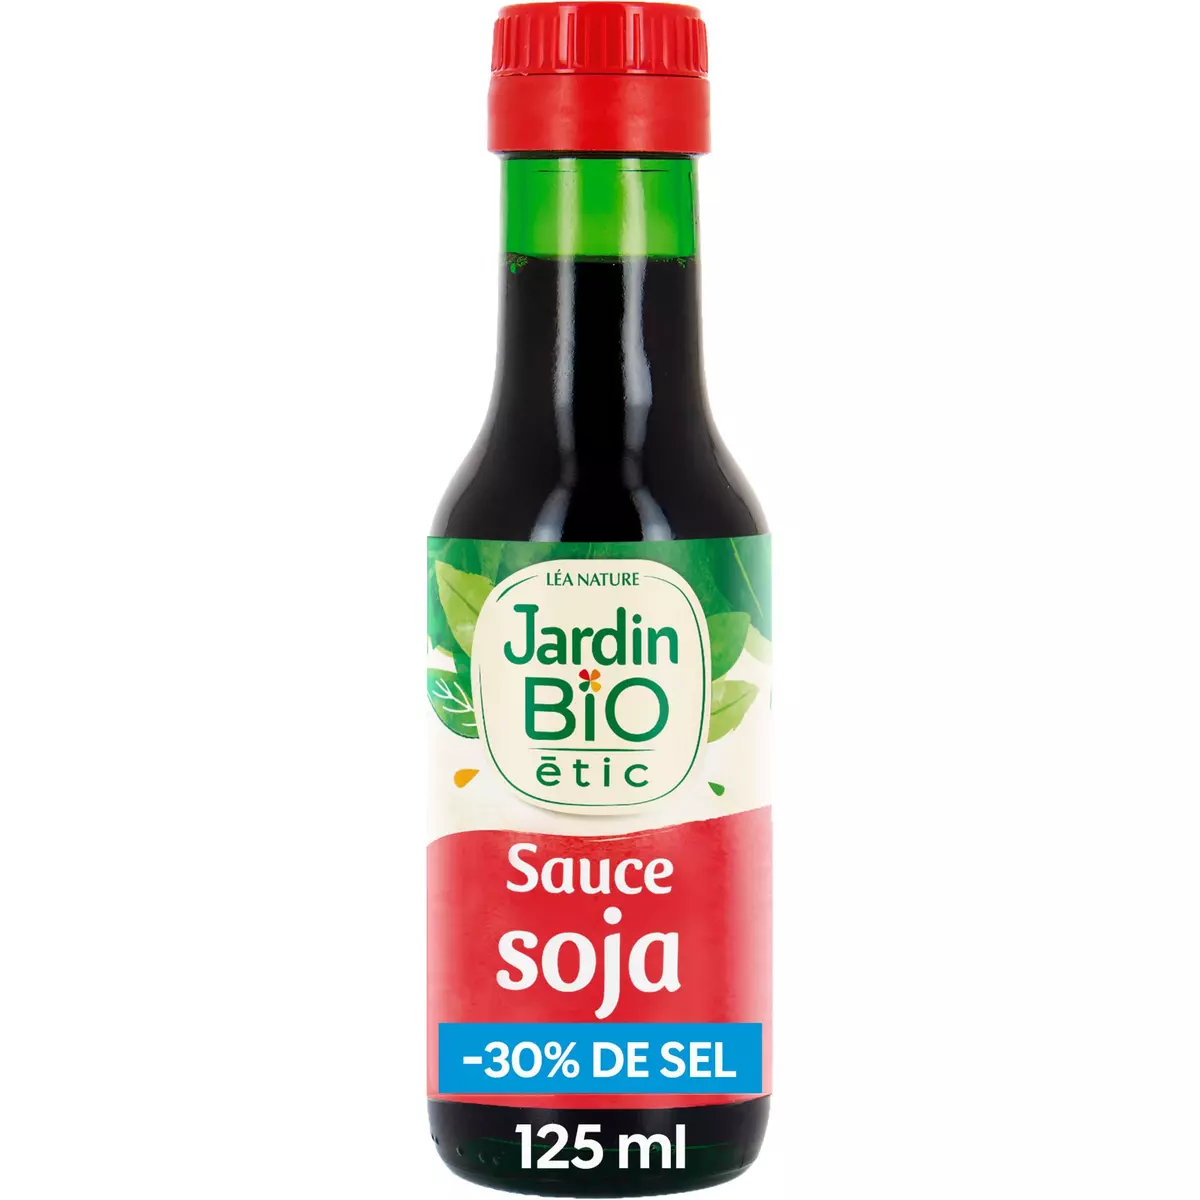 JARDIN BIO ETIC Sauce soja -30% de sel 125ml